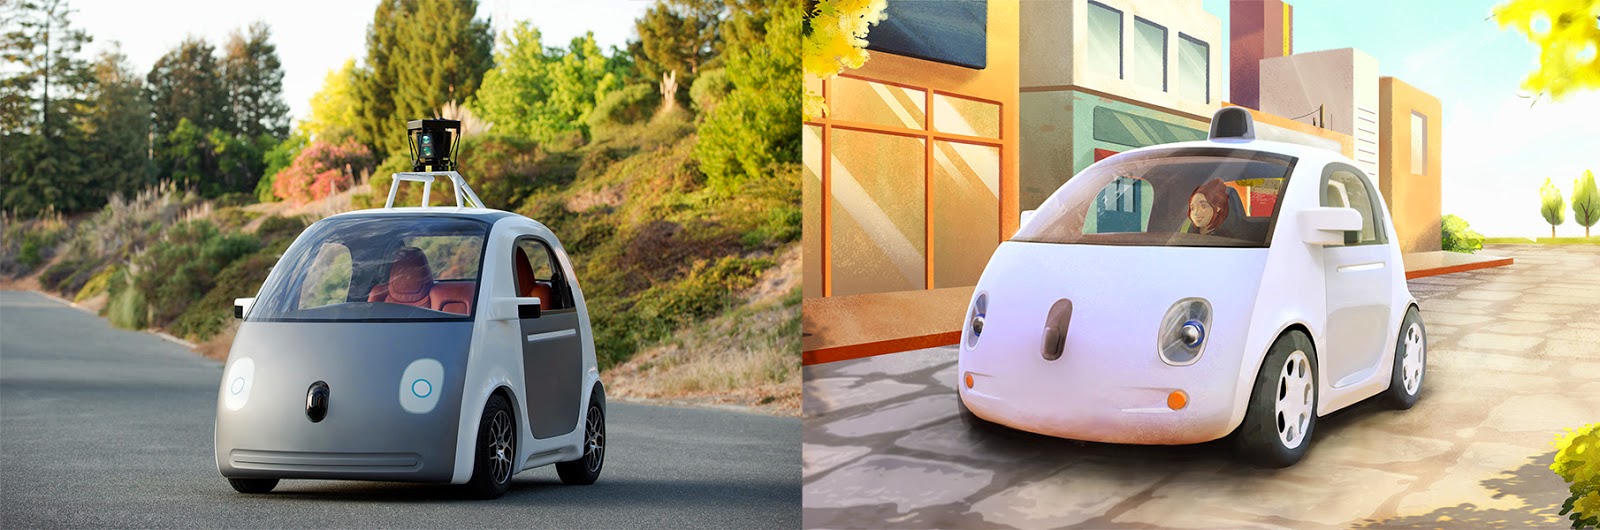 Google Self Driving Vehicle Prototype